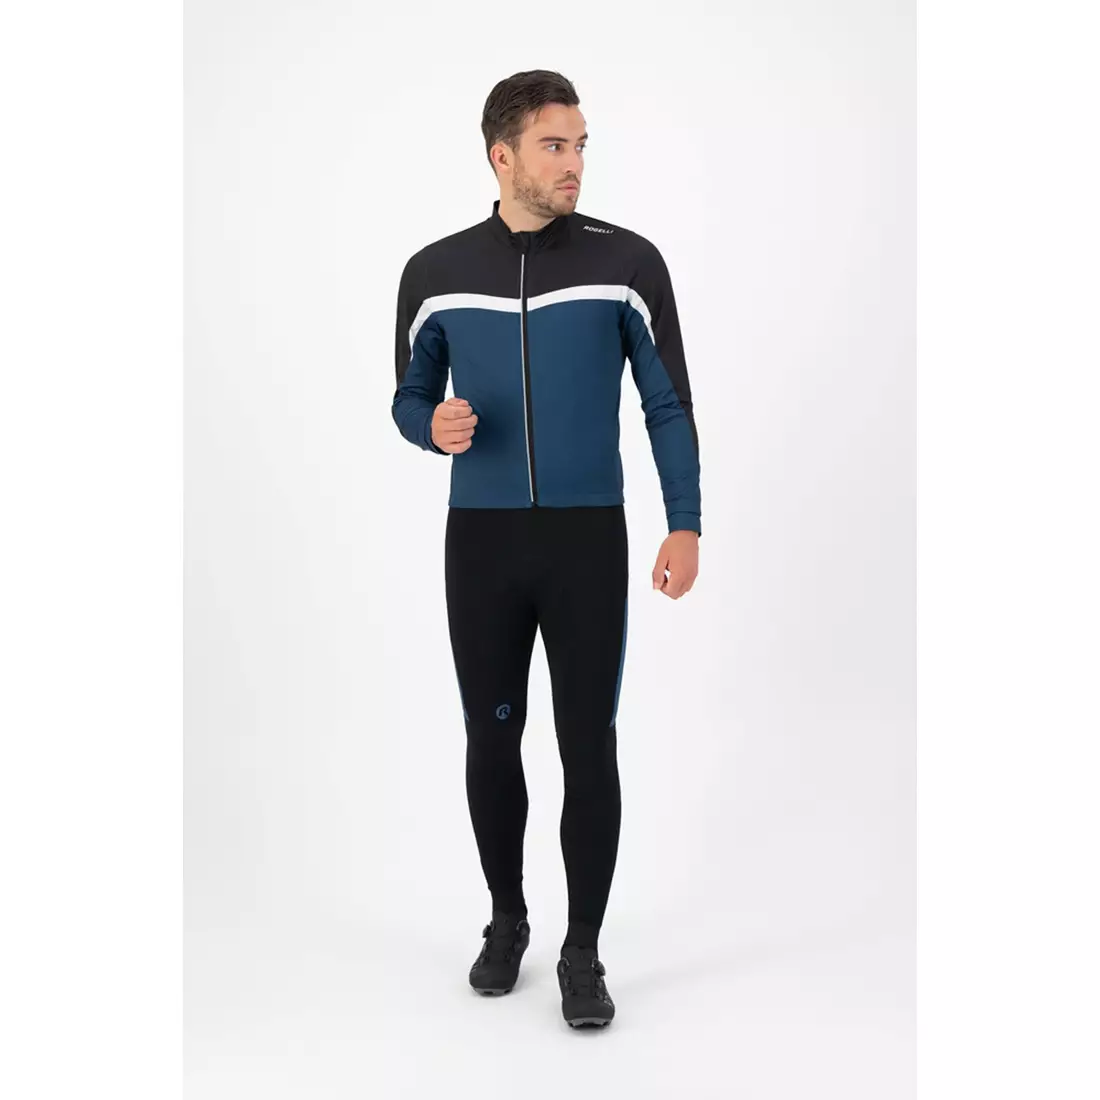 Rogelli Men's insulated cycling sweatshirt COURSE, blue, ROG351006